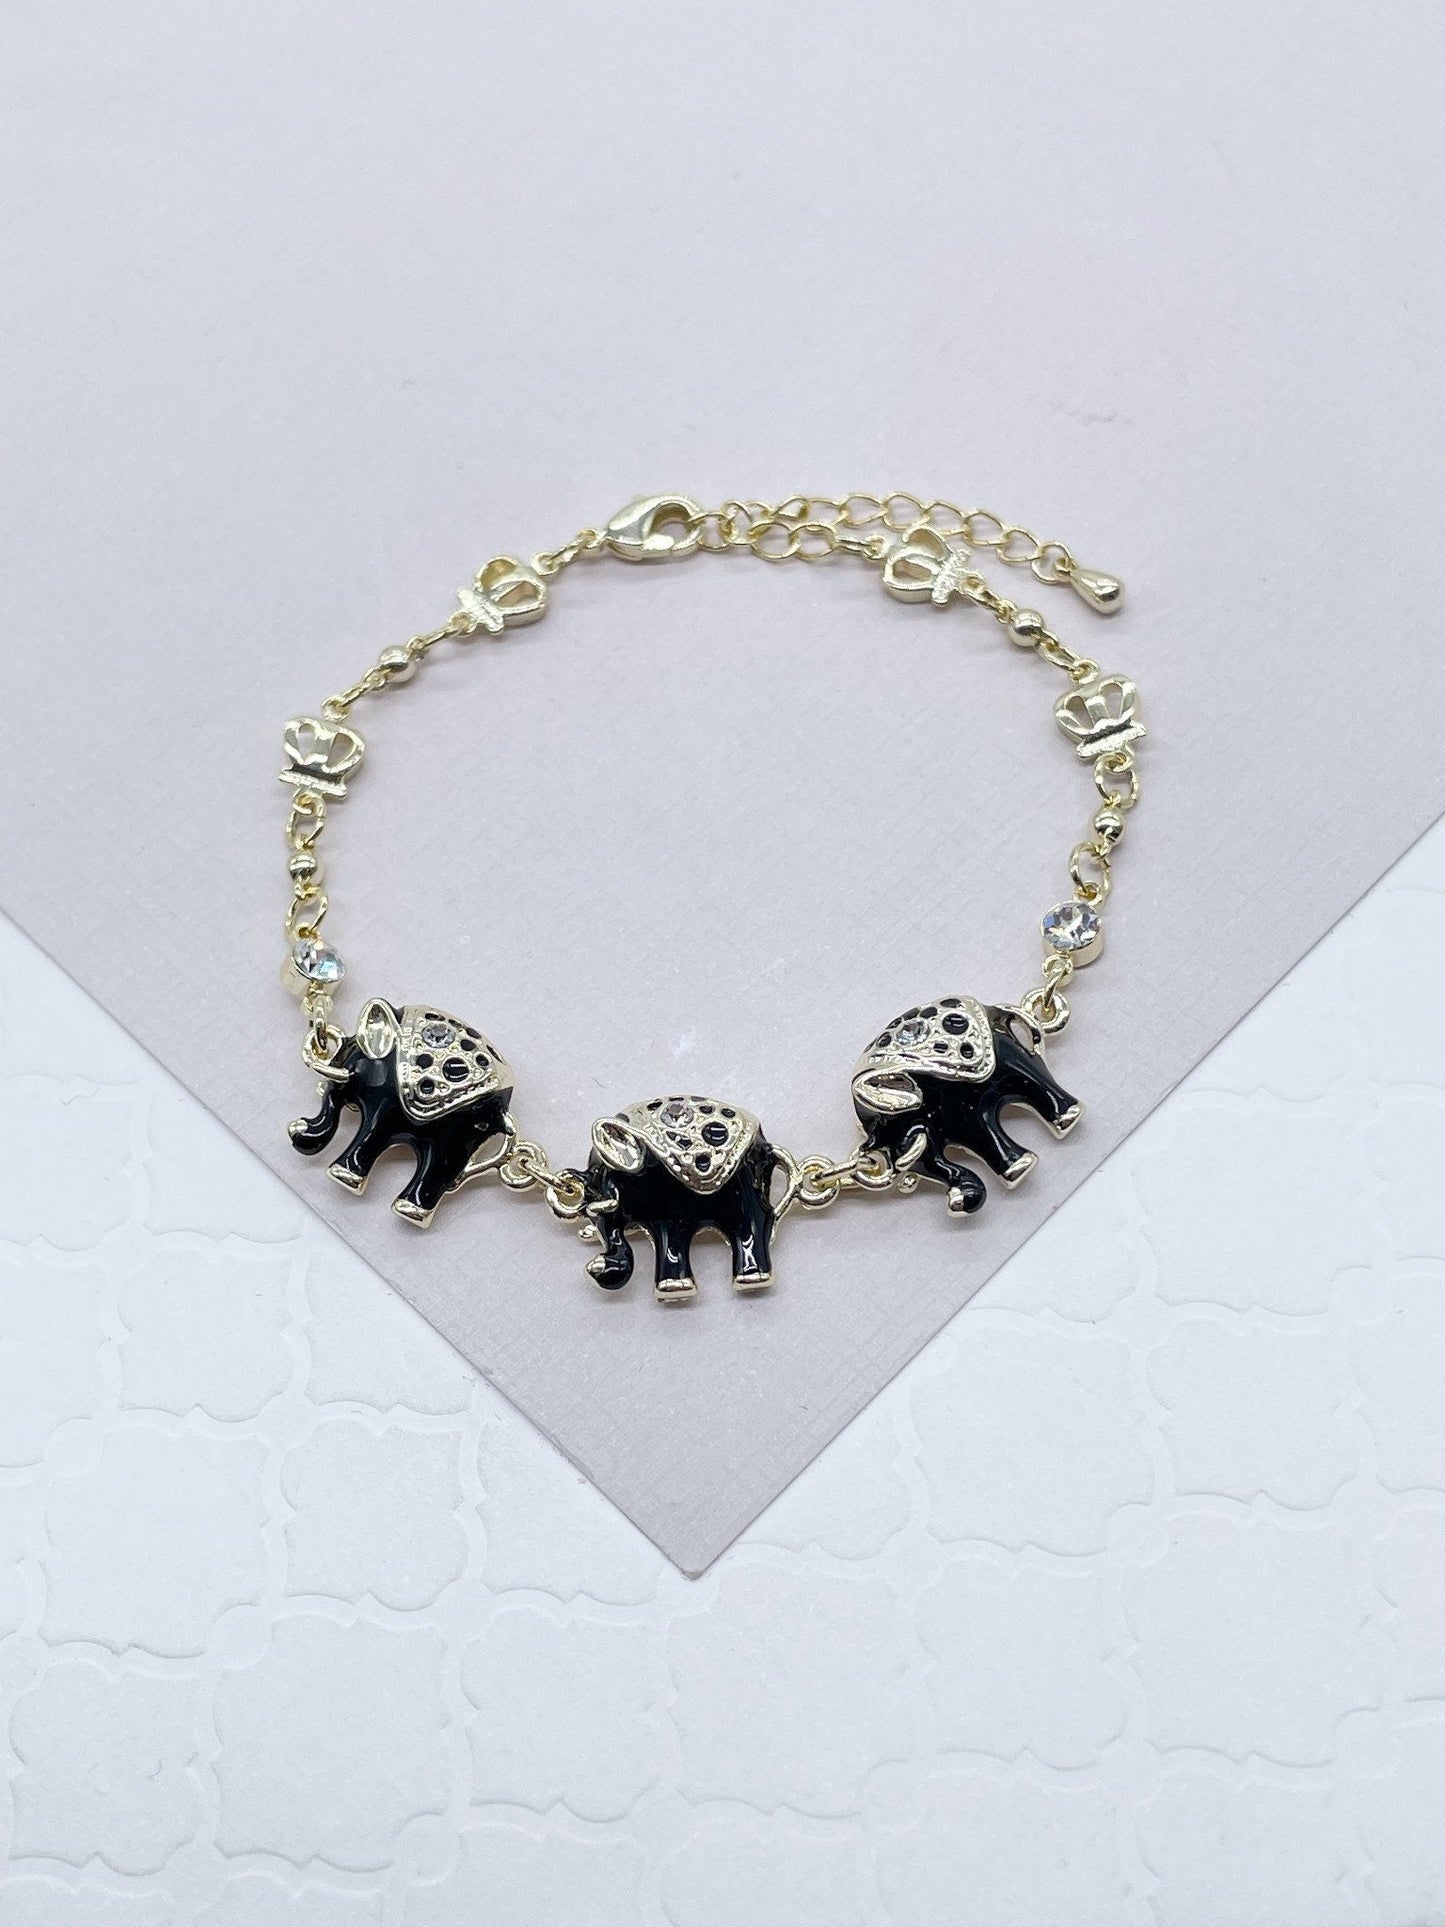 18k Gold Filled Multi Color Enamel Puffy Elephant Bracelets, Blue, Red, White